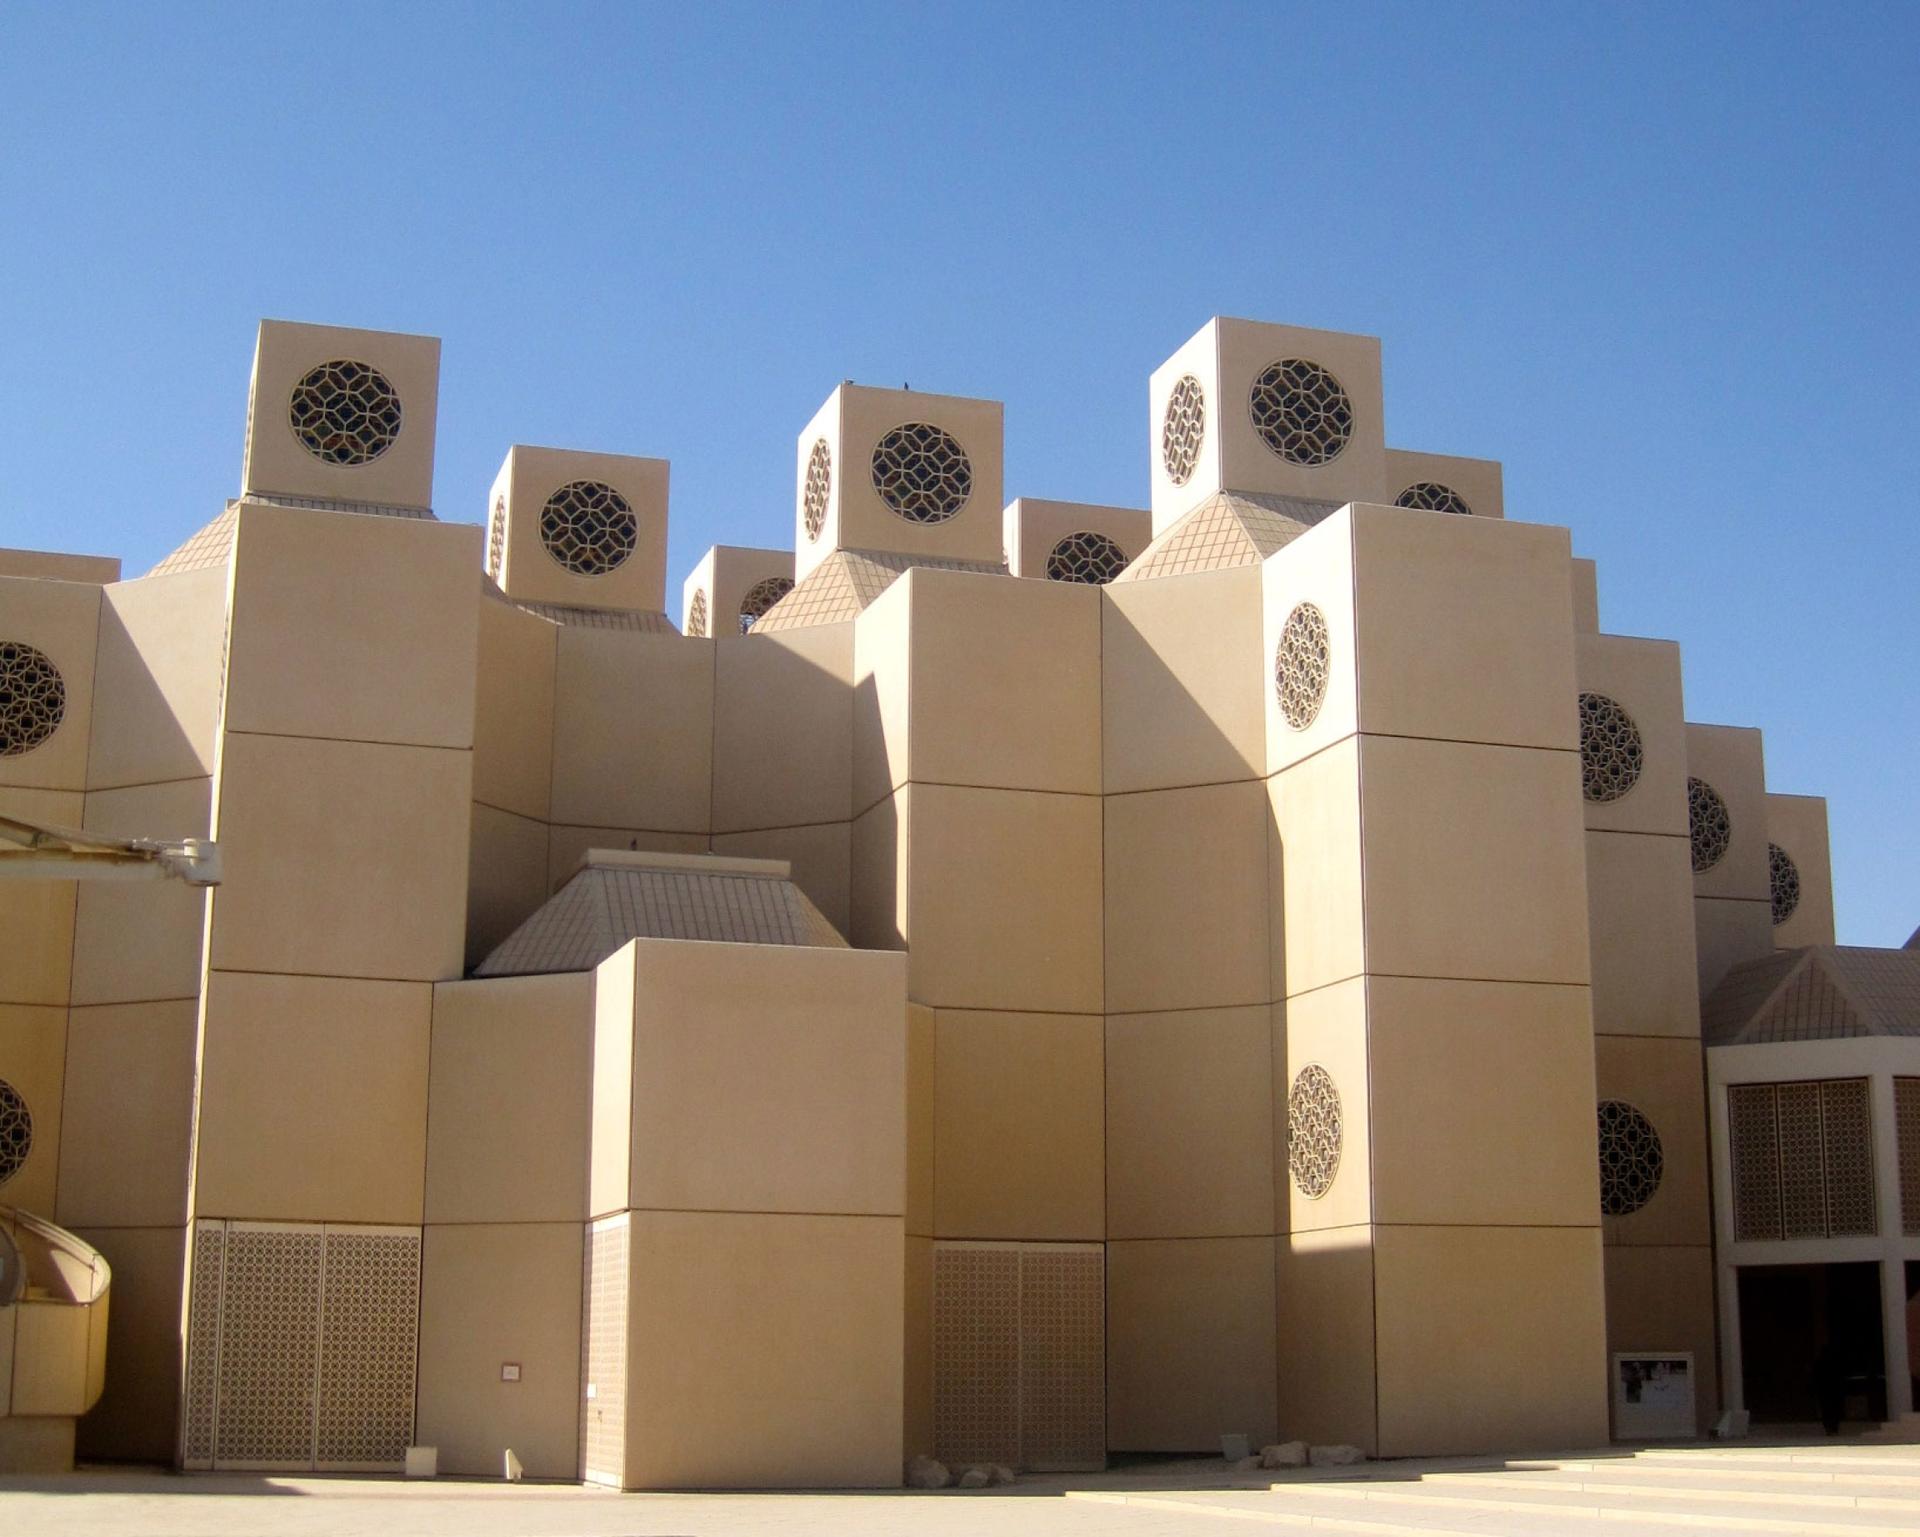 Qatar University campus features new wind catcher design built into the architecture. 